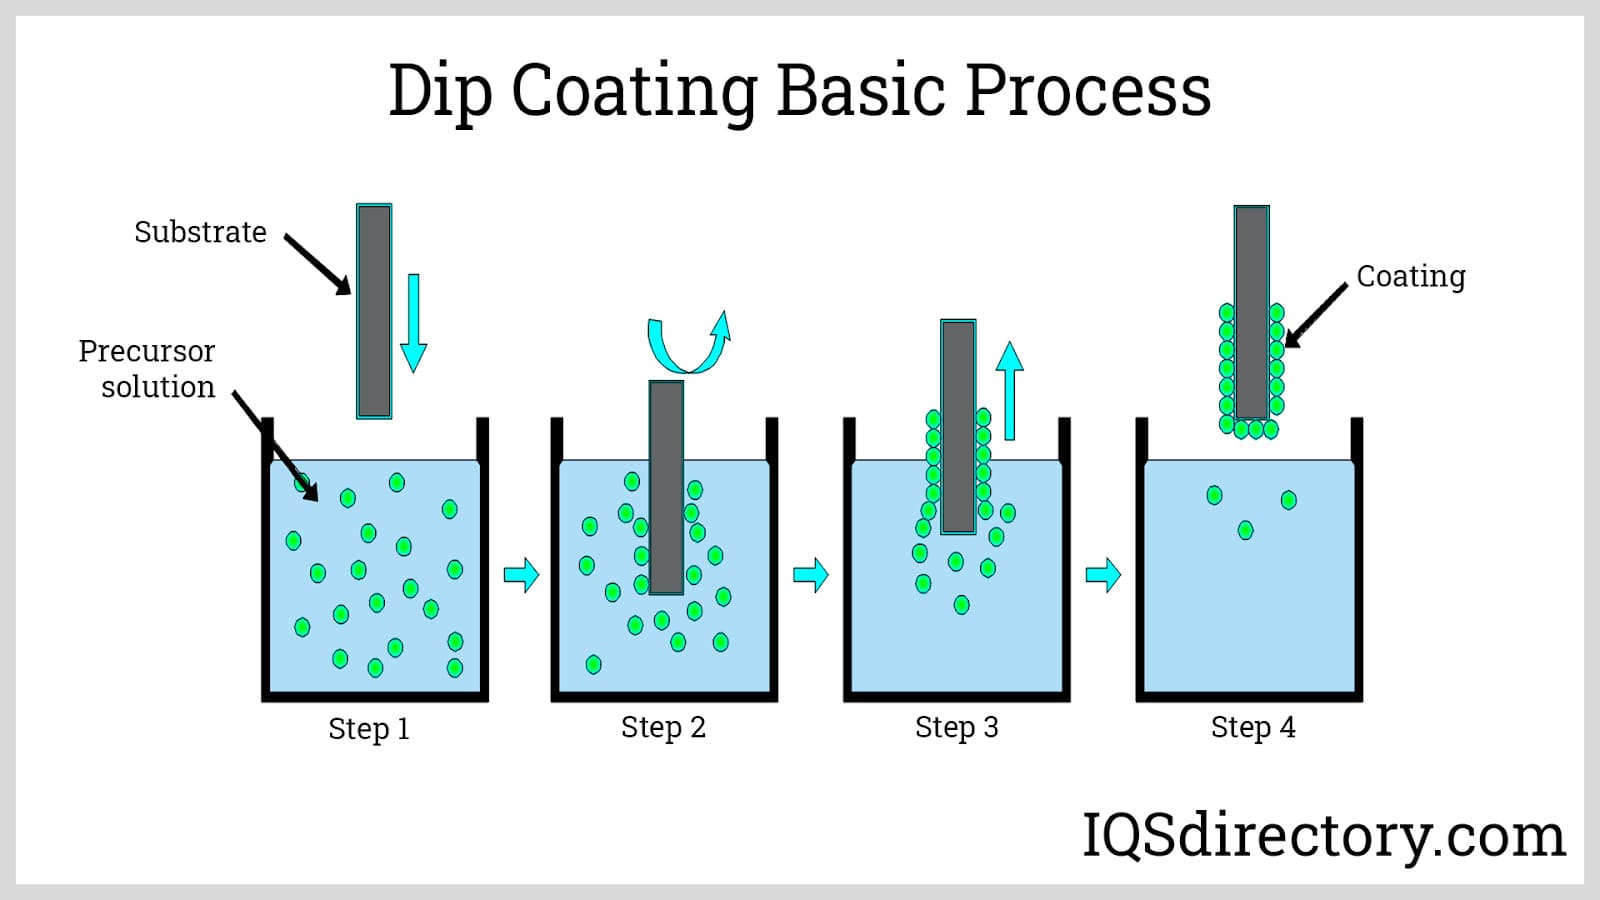 Dip Coating Basic Process